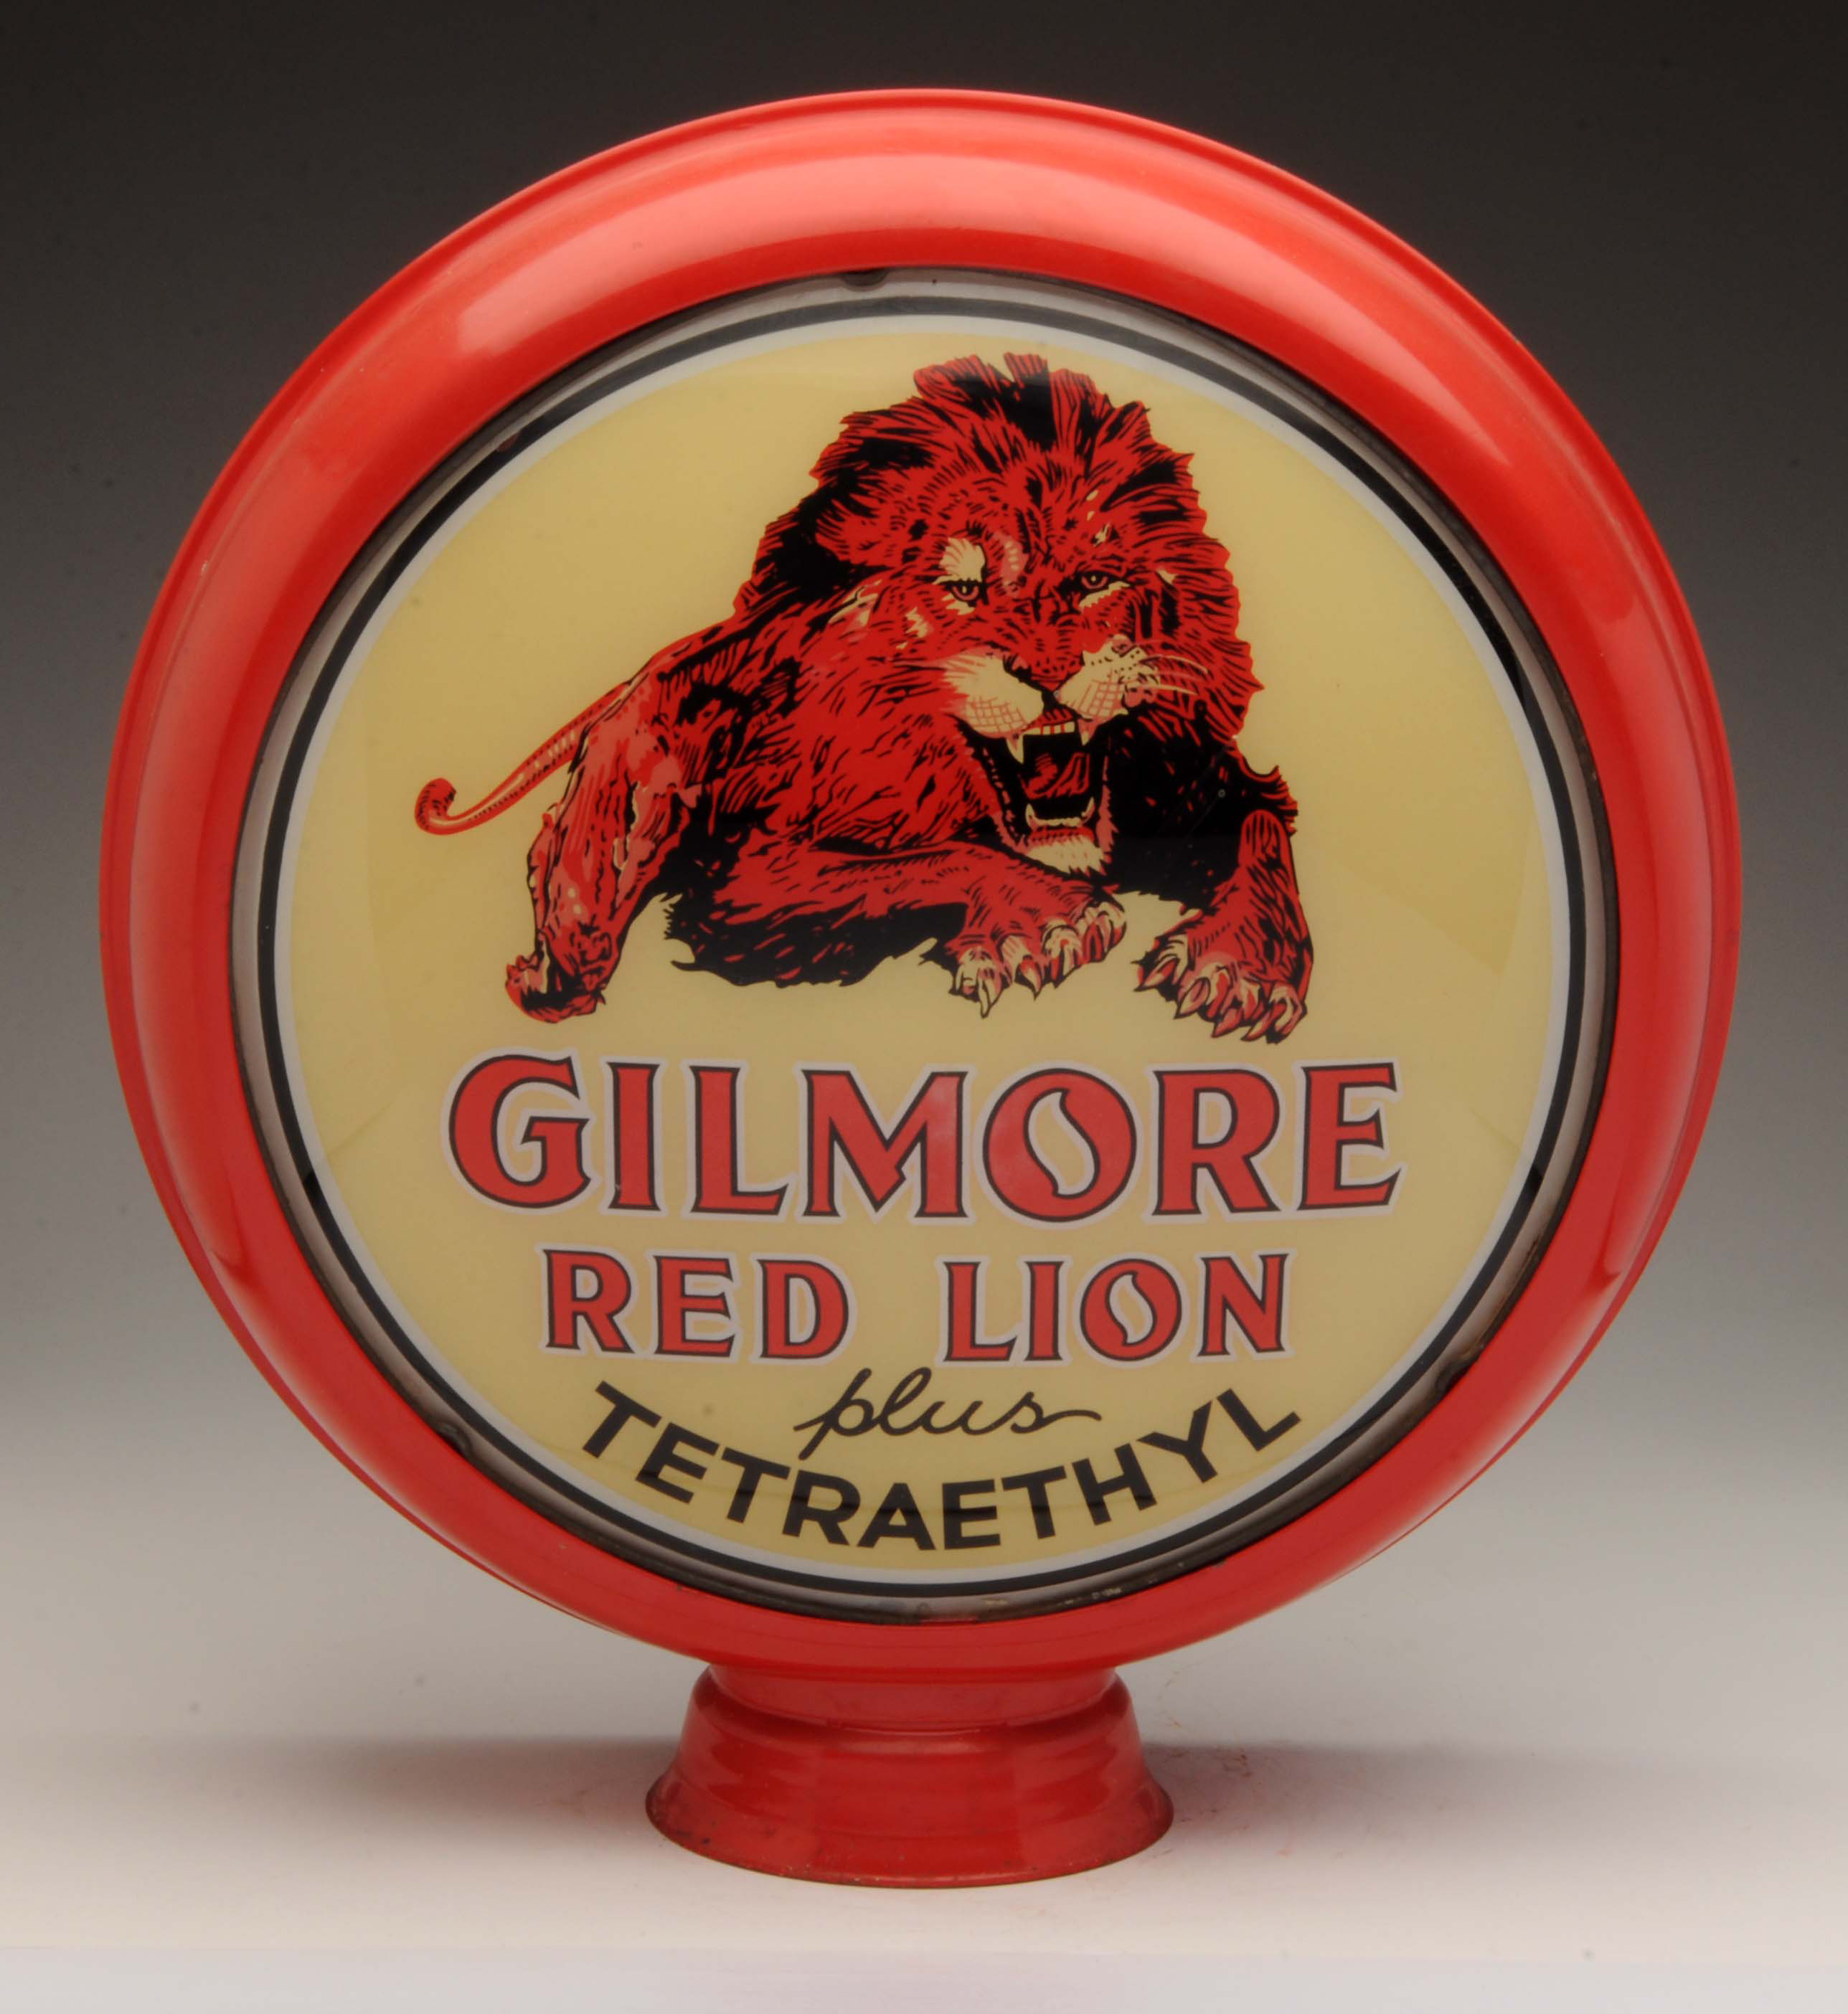 Lot #191, Gilmore Red Lion plus Tetraethyl Single Globe Lens, estimated at $12,000-$16,000.